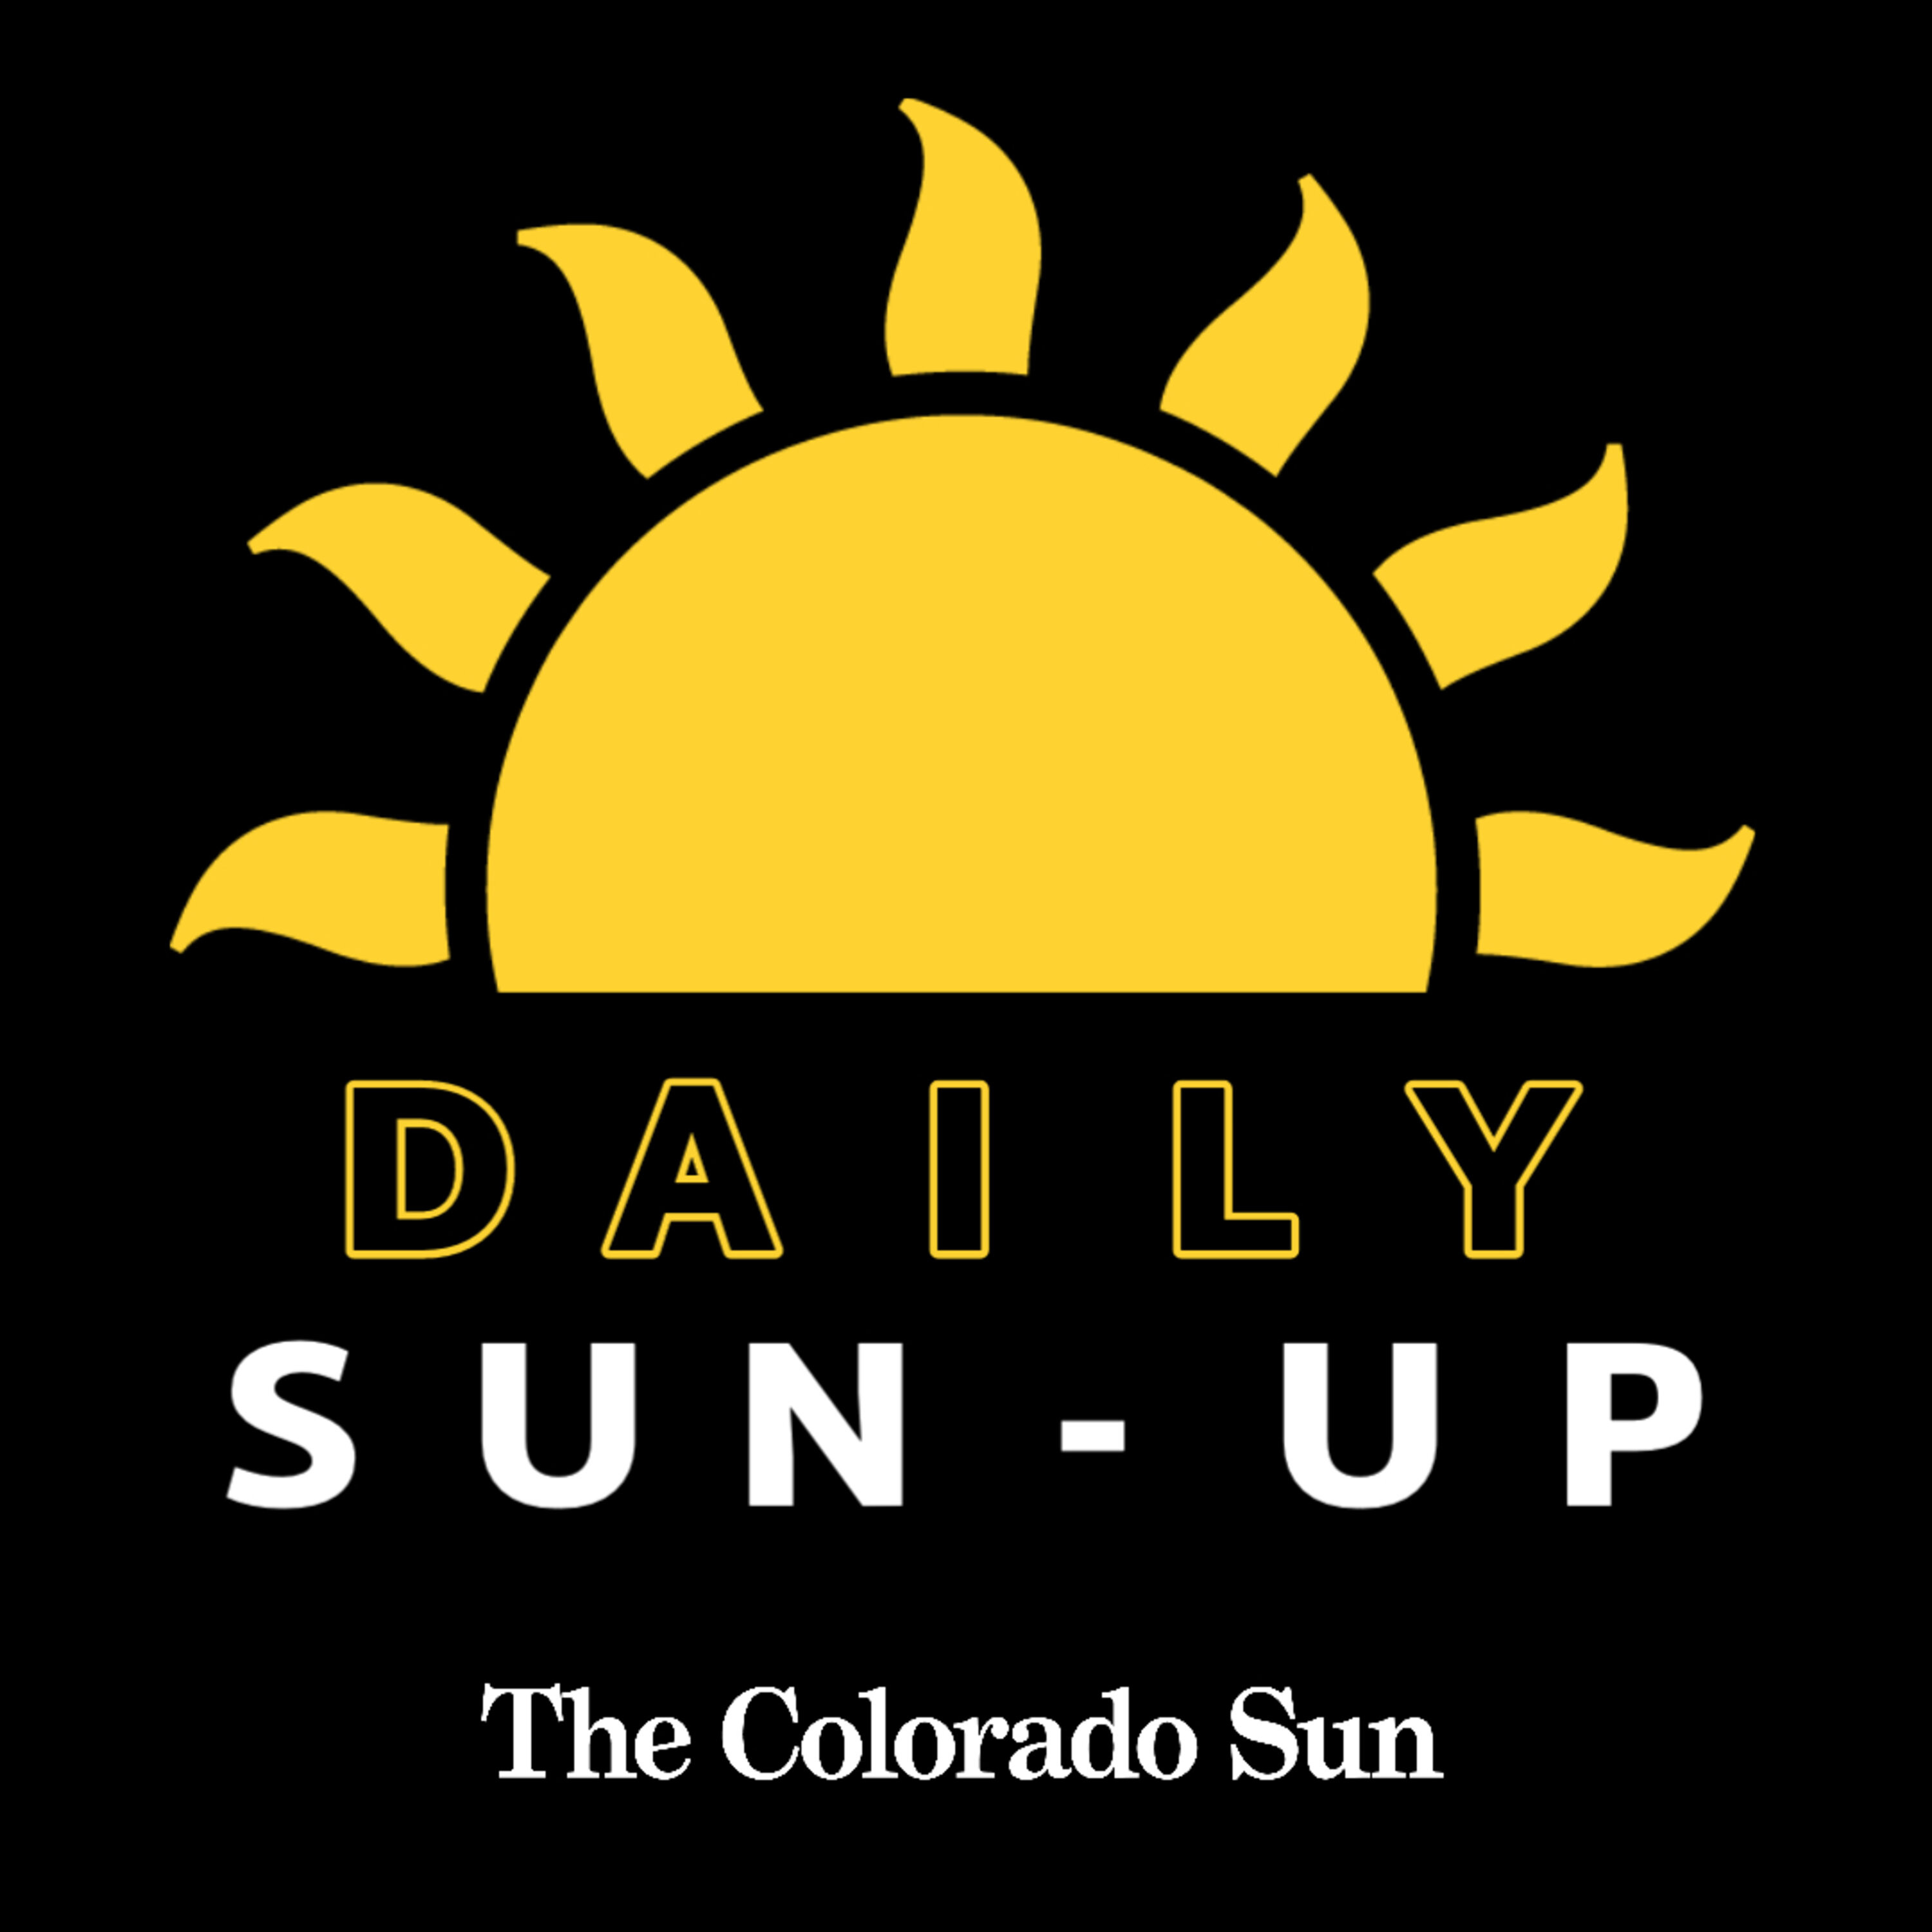 Colorado lawmakers set aside $28 million to make public transit free in Aug; The Denver-Boulder Turnpike mascot